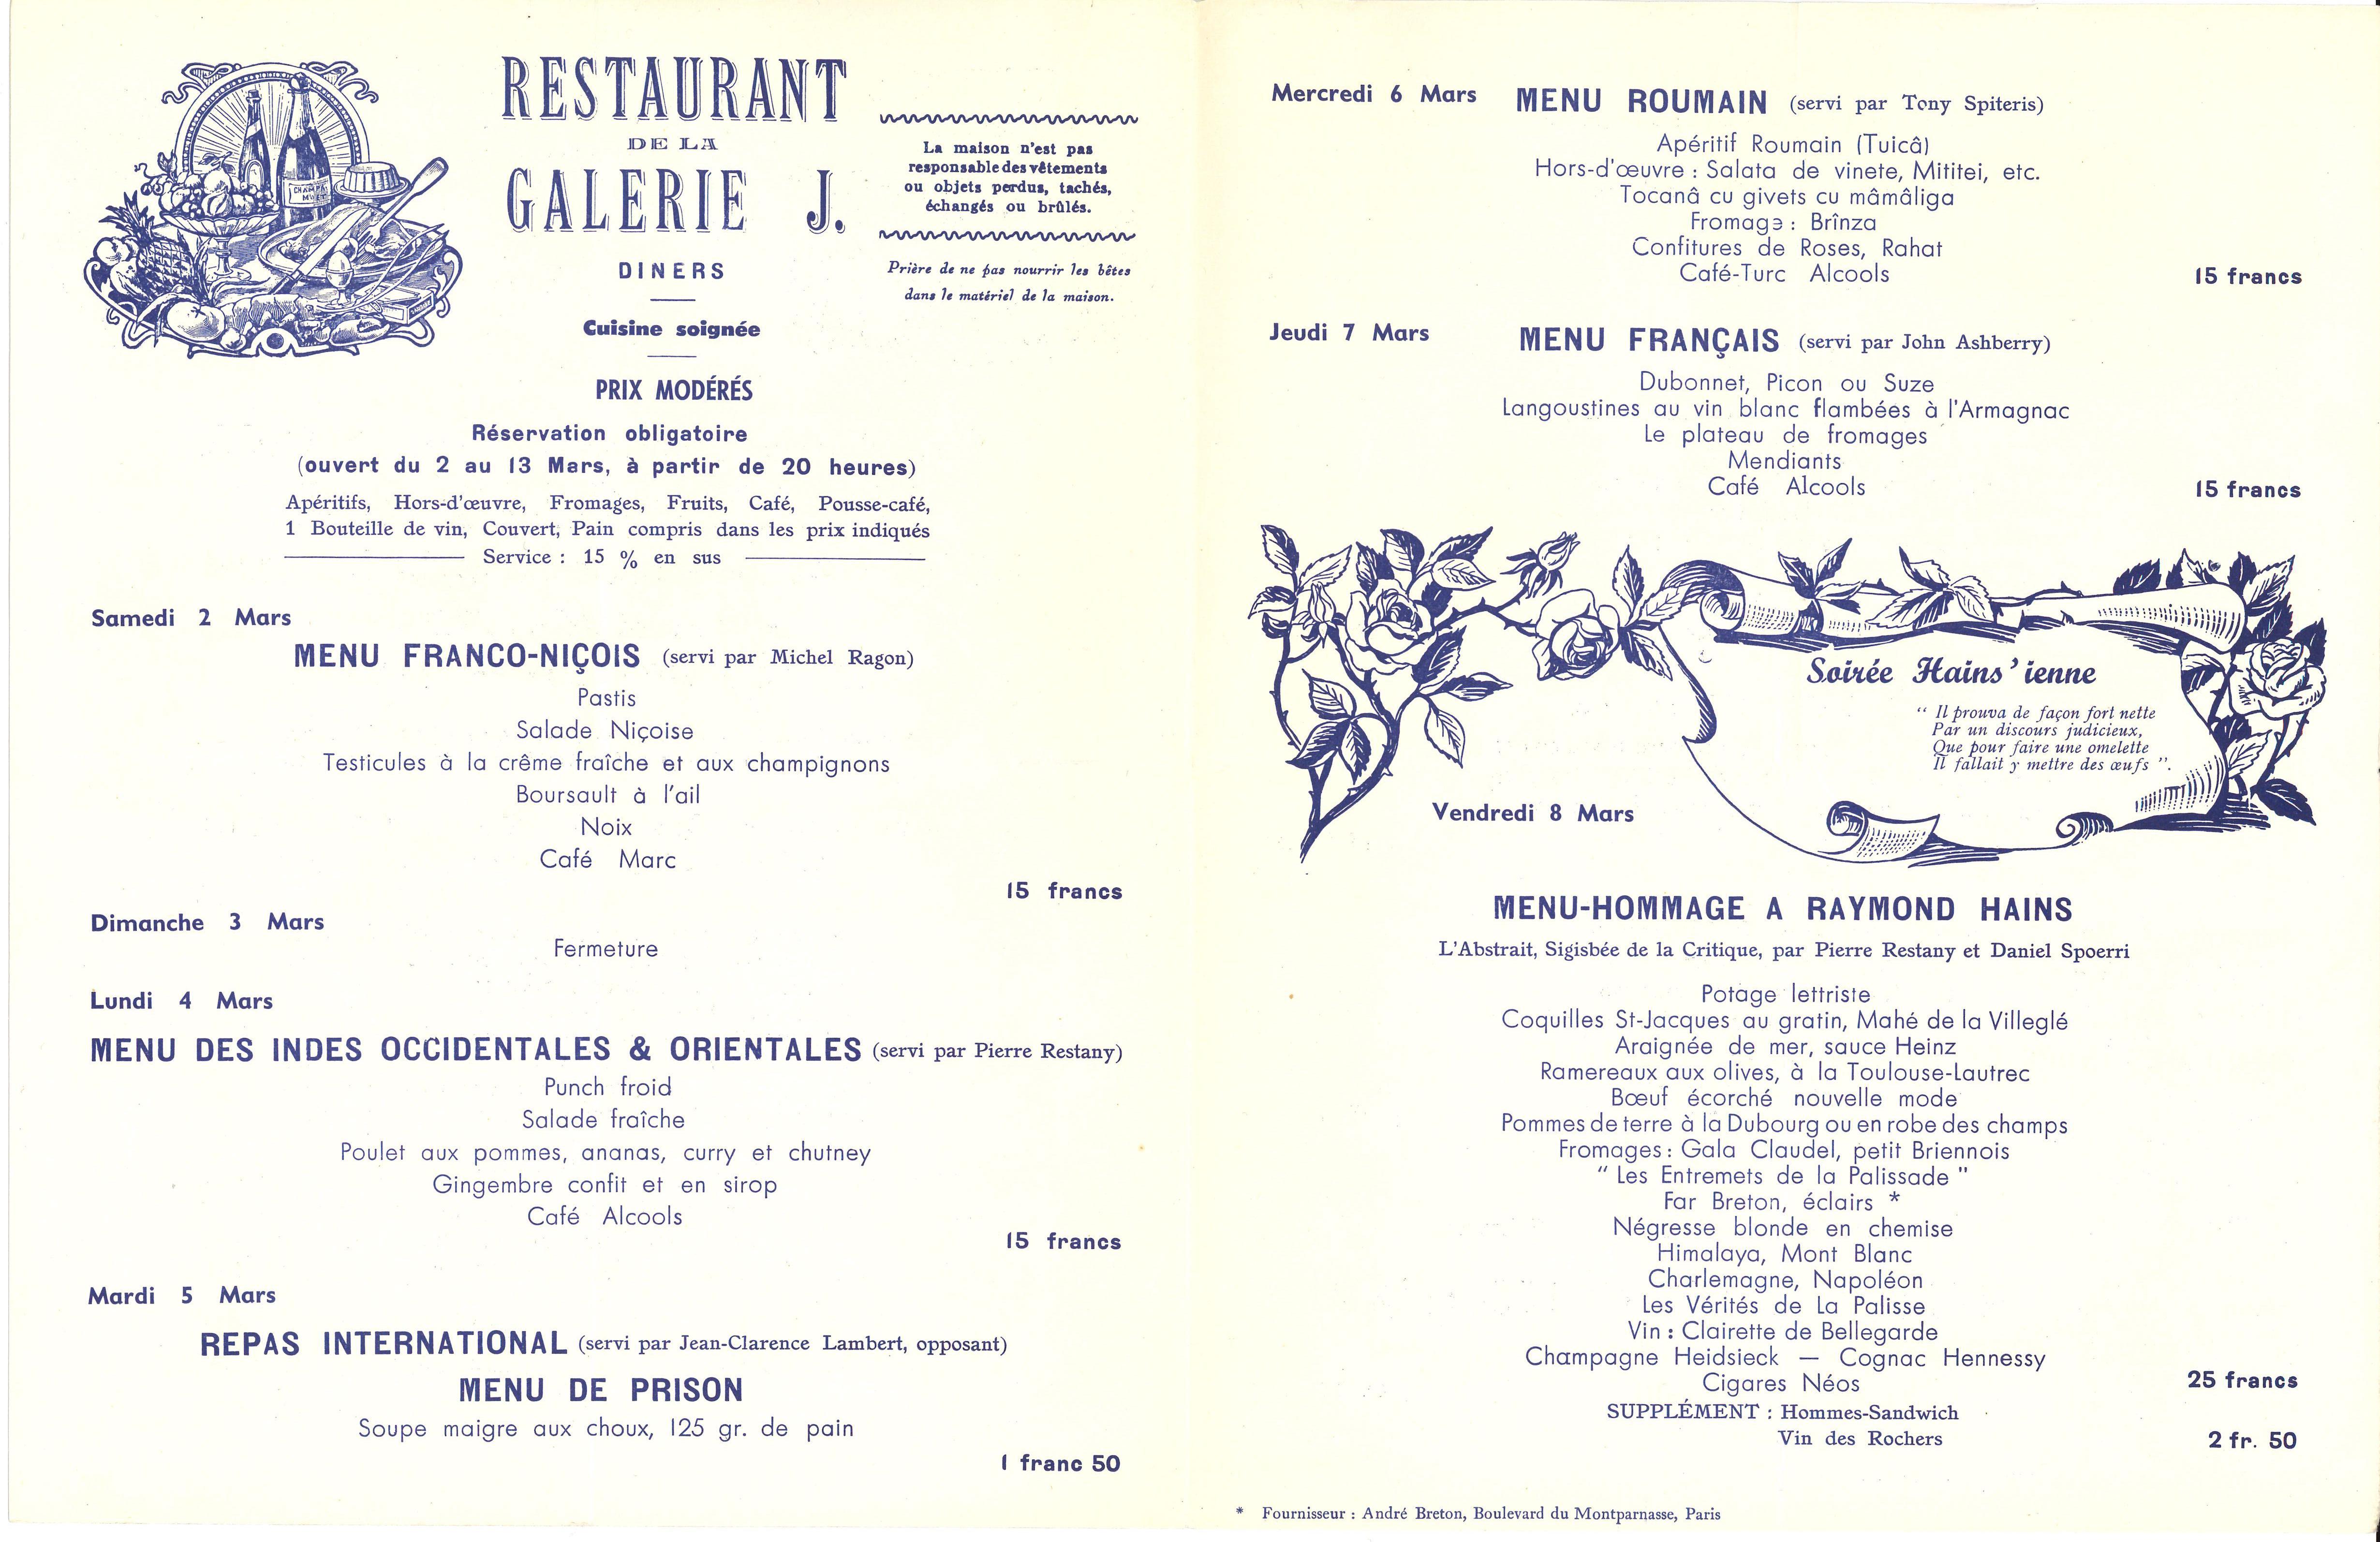 Daniel Spoerri, invitation/menu. Restaurant de la Galerie J. Paris, Galerie J, 1963; Archiv der Avantgarden, Staatliche Kunstsammlungen Dresden © VG Bild-Kunst, Bonn